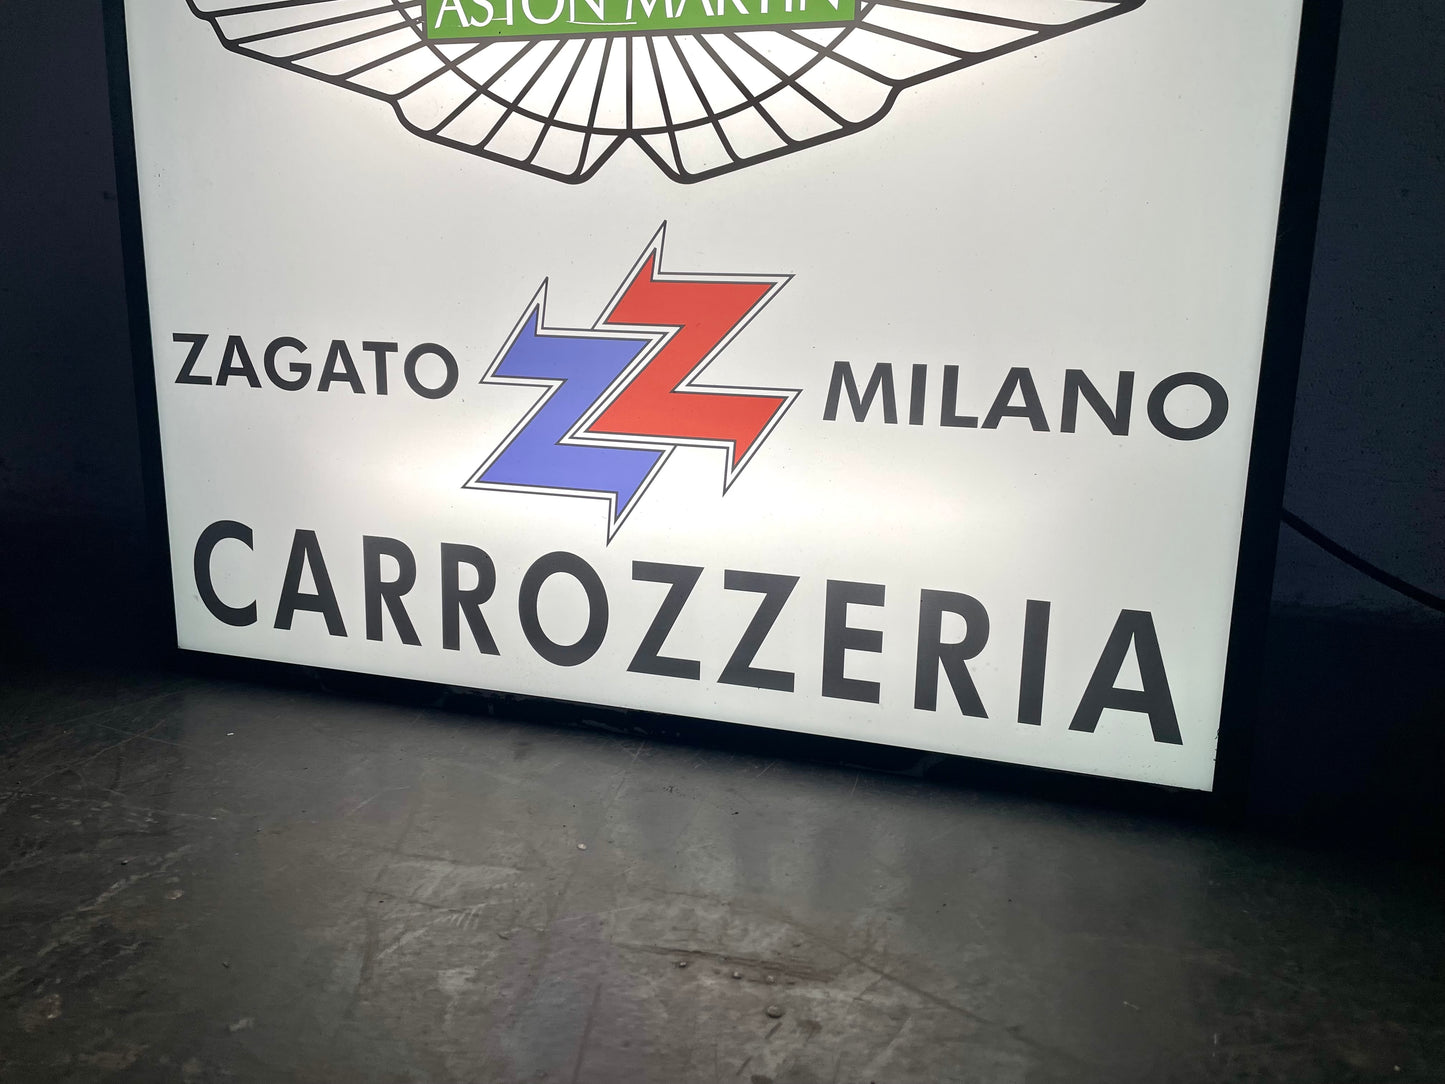 Insegna luminosa Aston Martin Zagato Milano